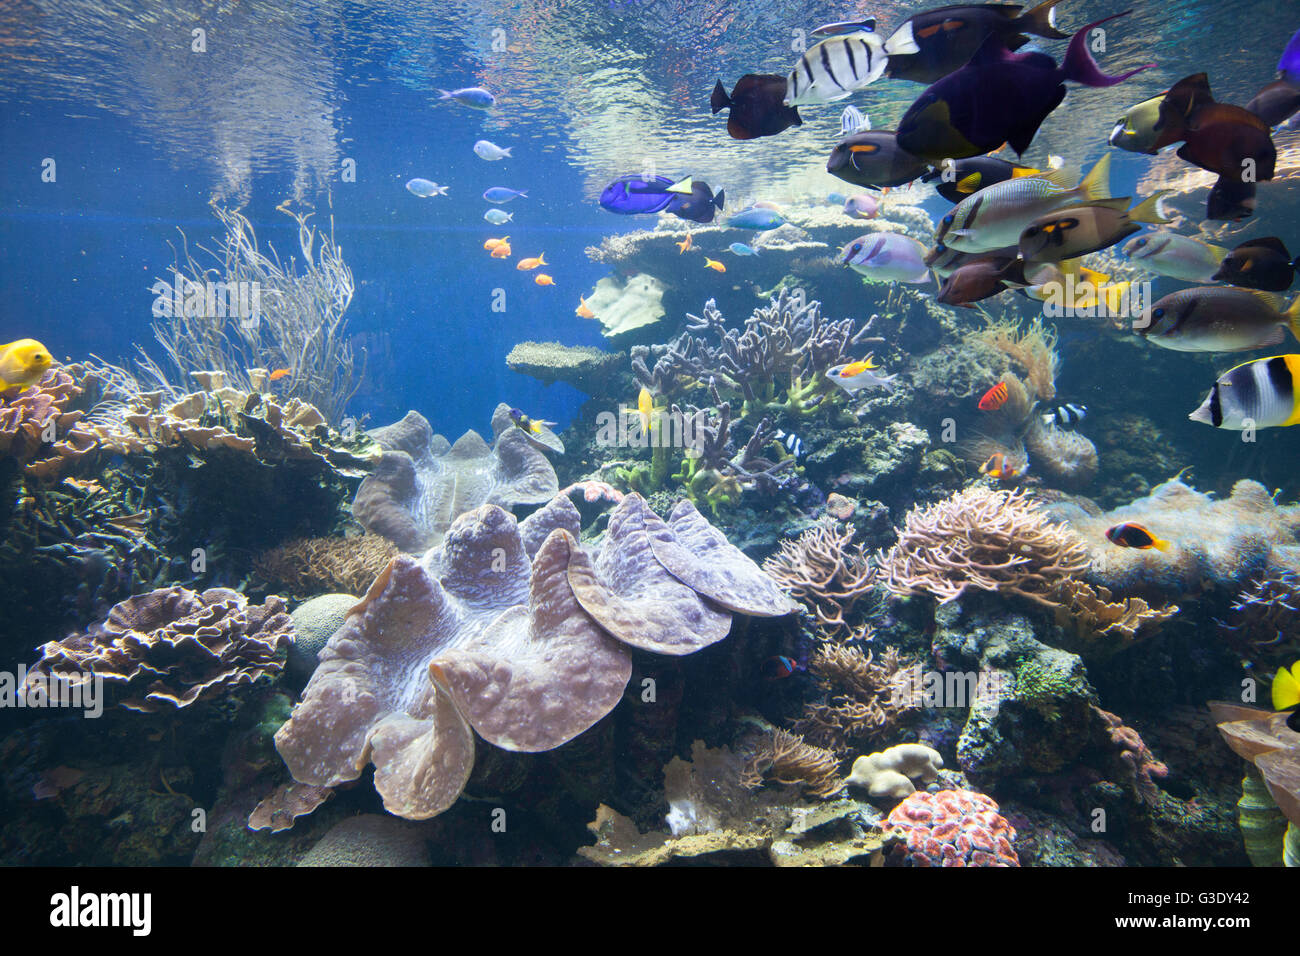 View of aquatic display at Waikiki Aquarium.  Fish and reef ecosystem. Stock Photo